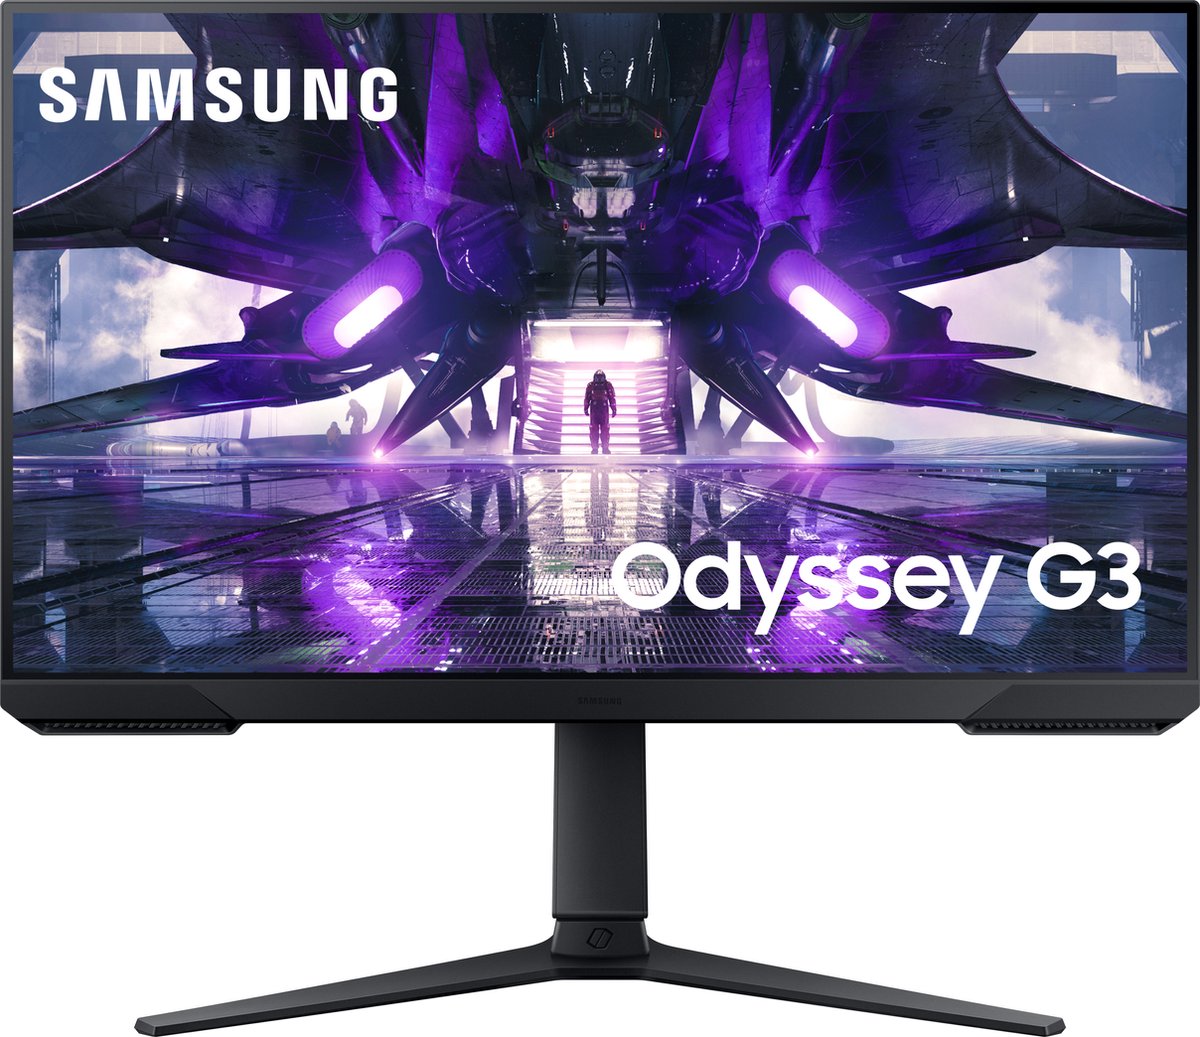 Samsung Odyssey G3 - Full HD Gaming Monitor - 27 inch - 165hz